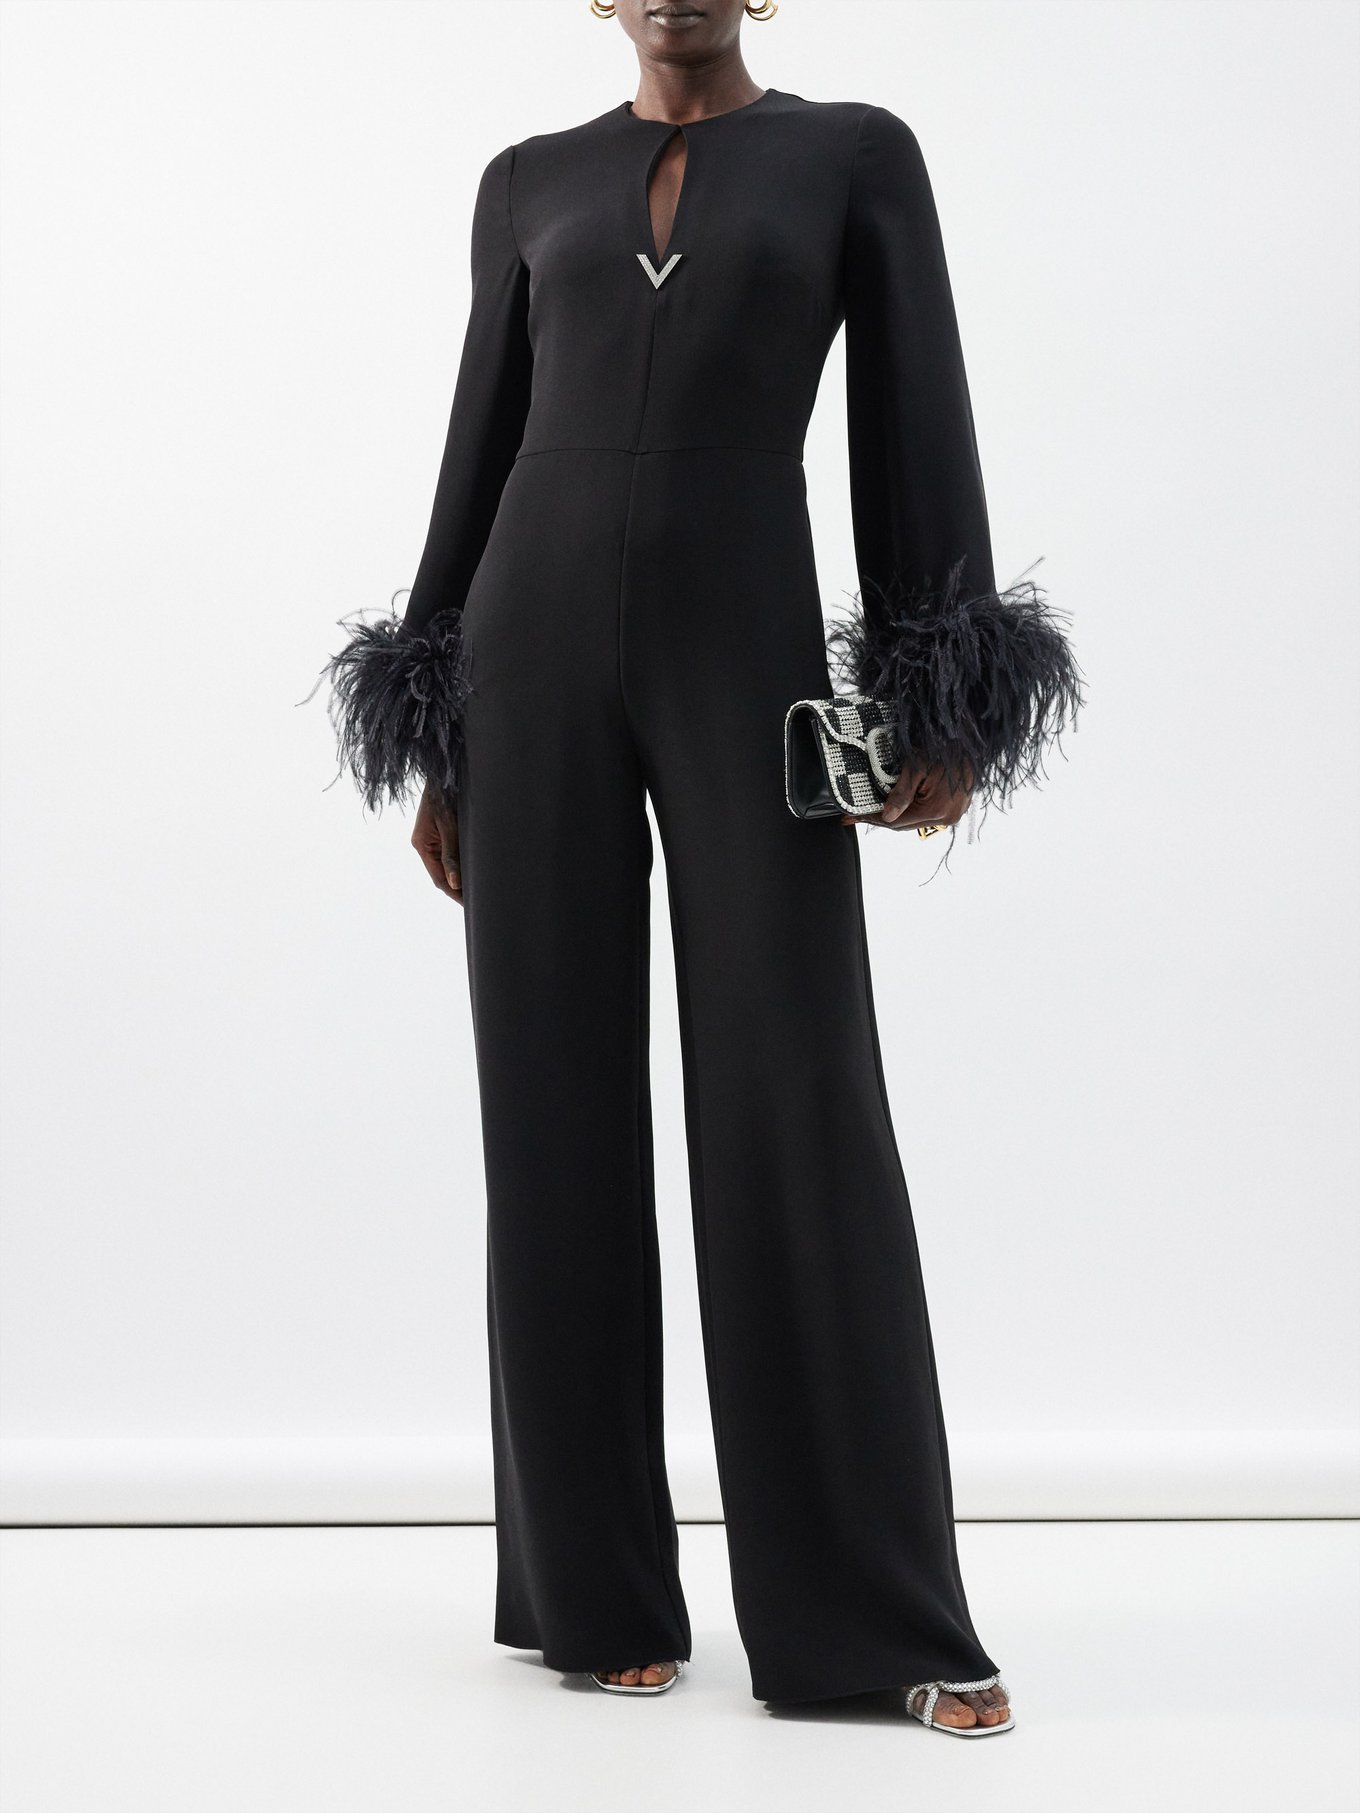 Black Cady Couture feather-trimmed silk jumpsuit, Valentino Garavani